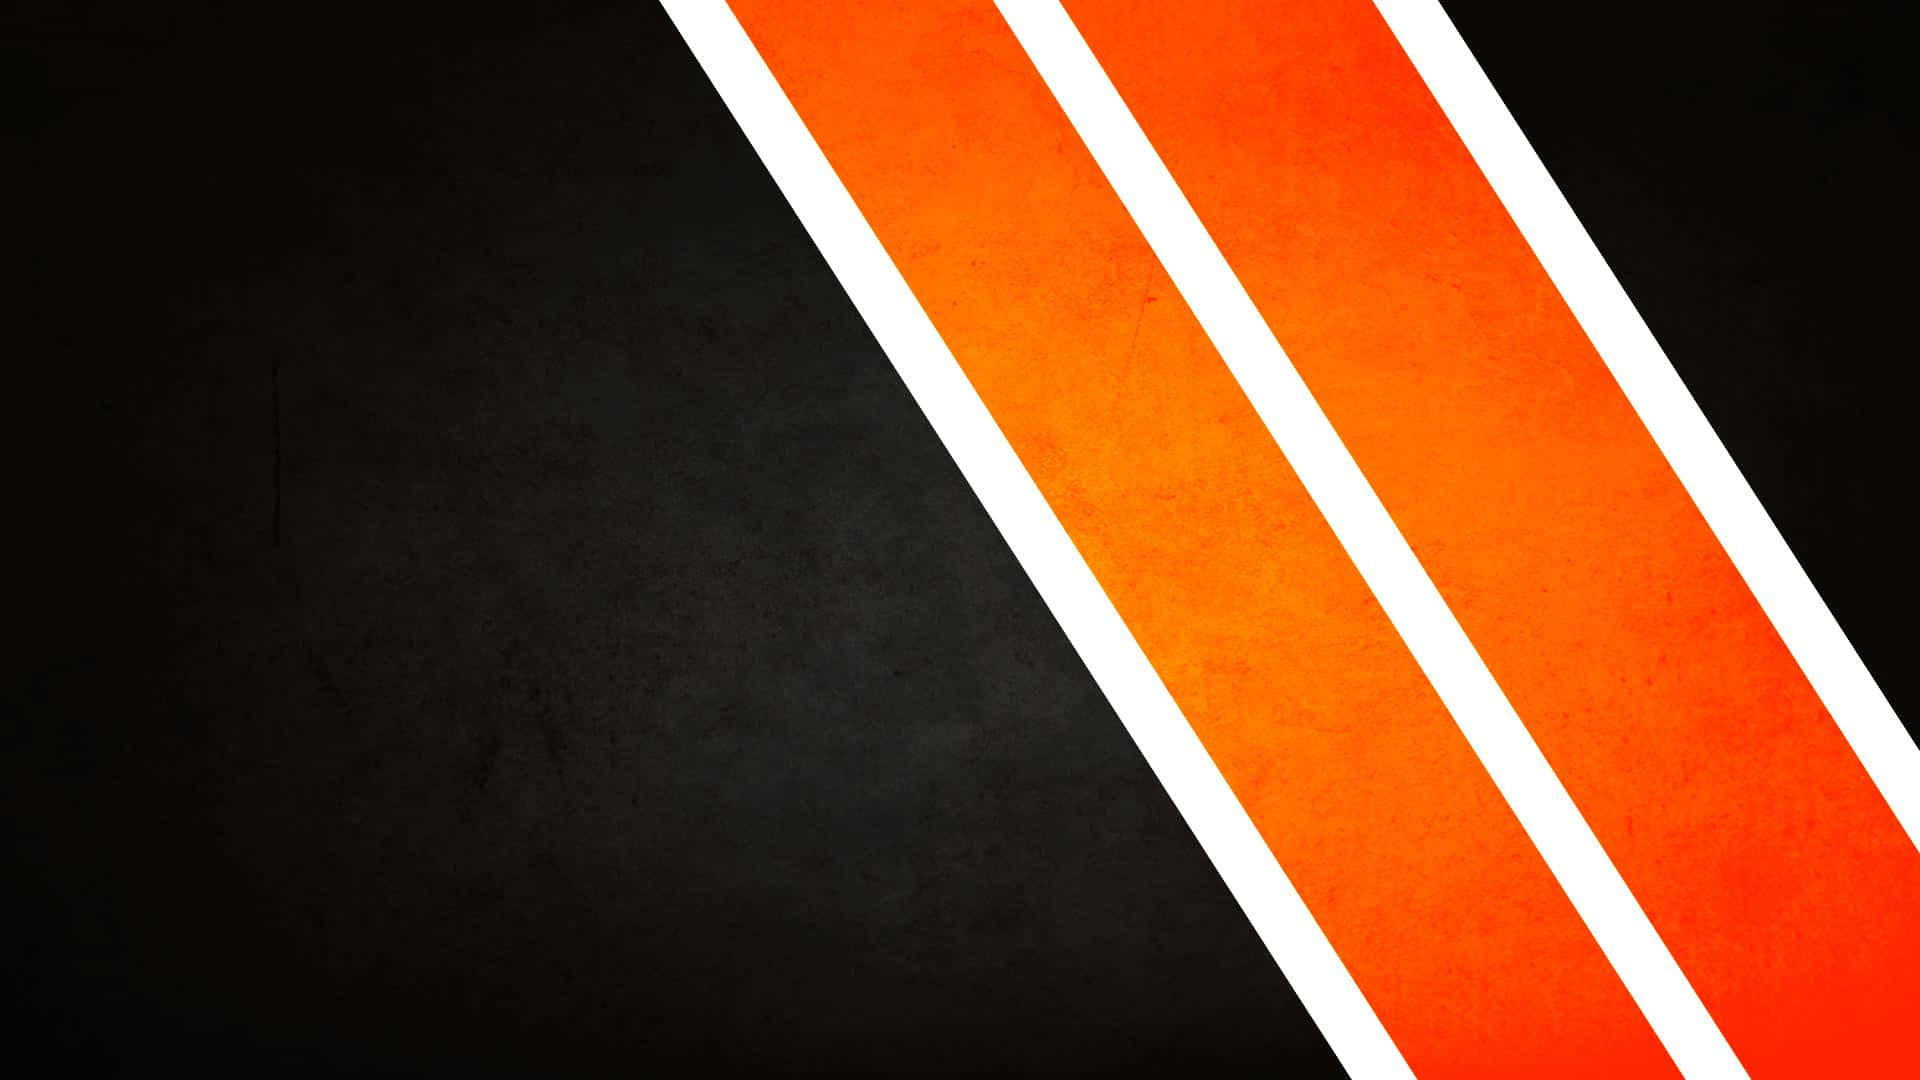 A striking Dark Orange wallpapers for your mobile or desktop.